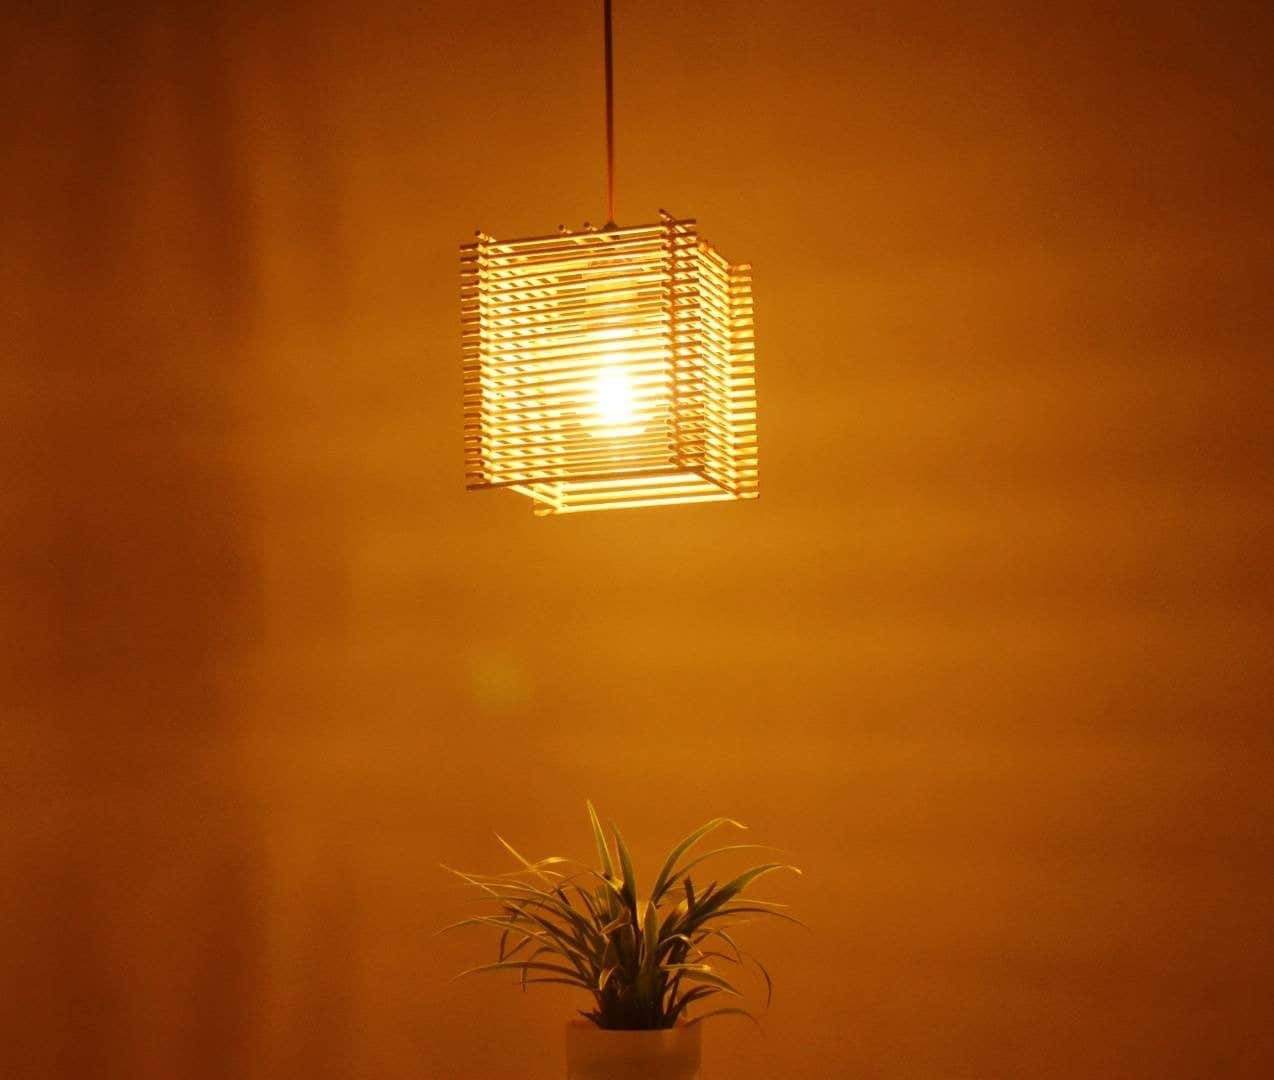 DIY Lampshade Made From Bamboo Sticks